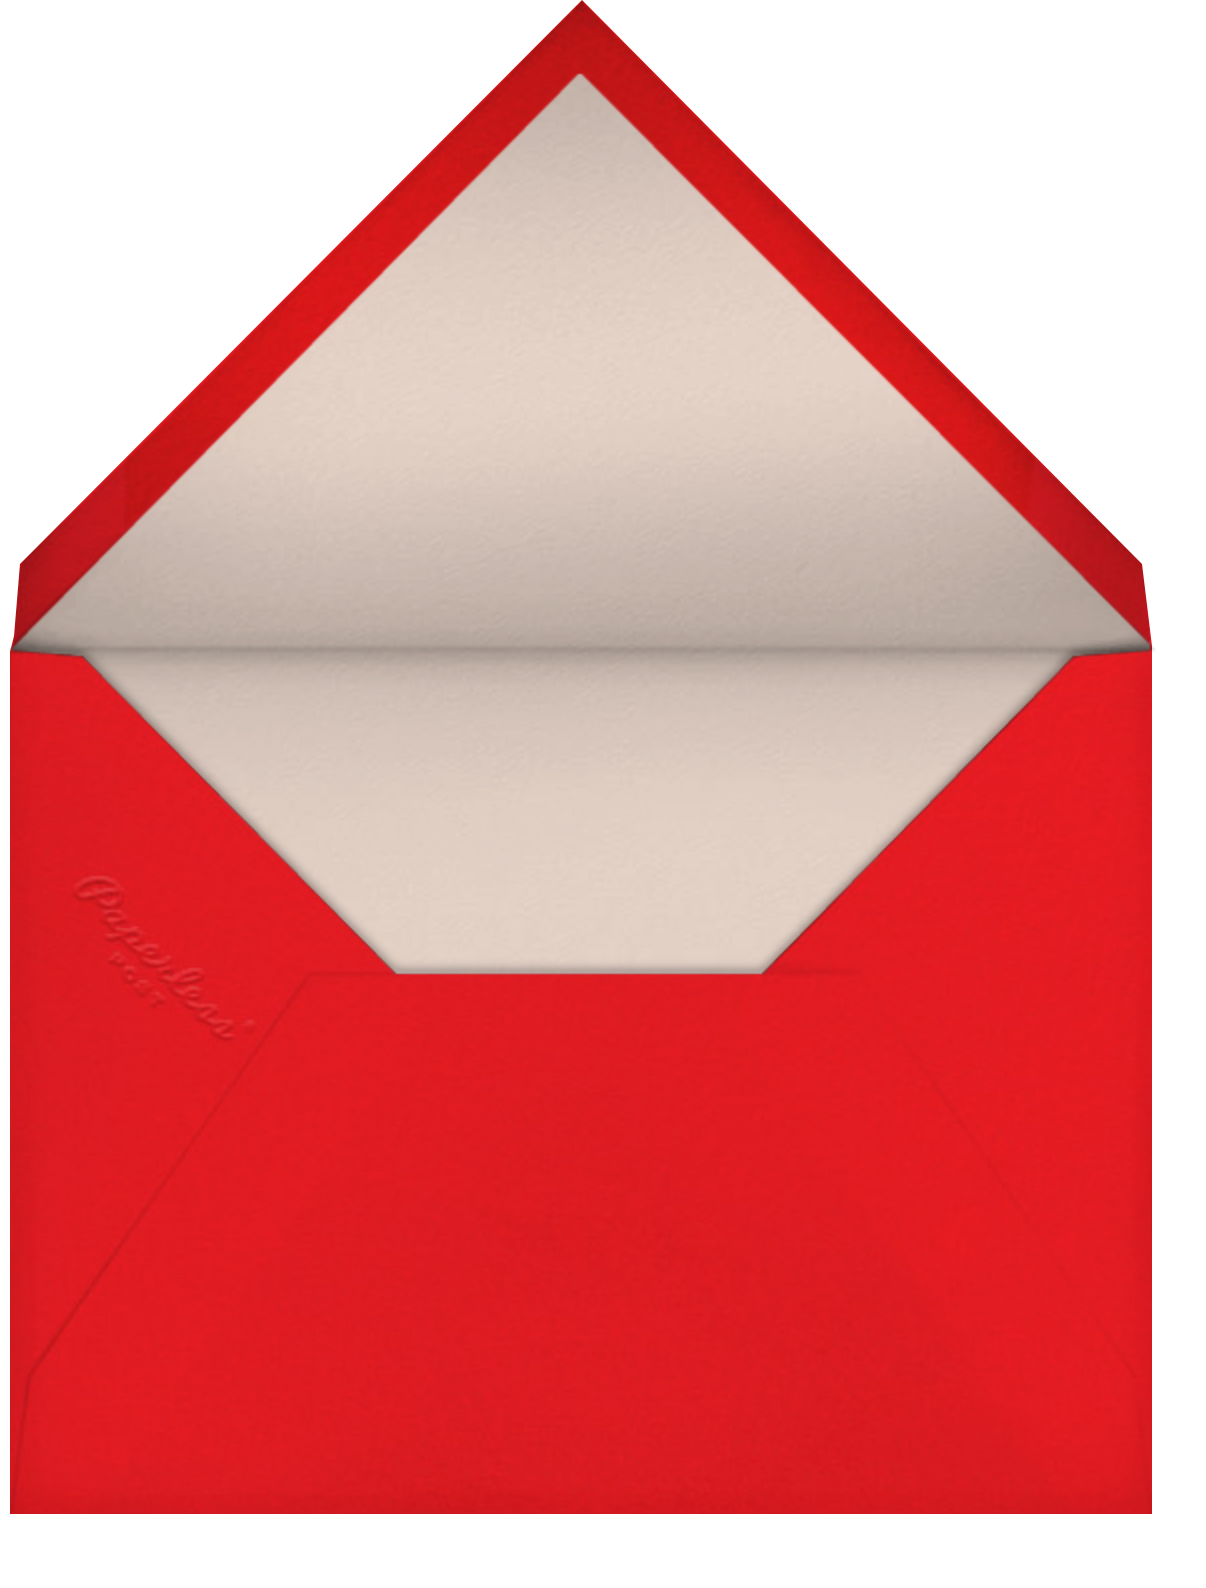 Frog Fella (Becca Stadtlander) - Red Cap Cards - Envelope